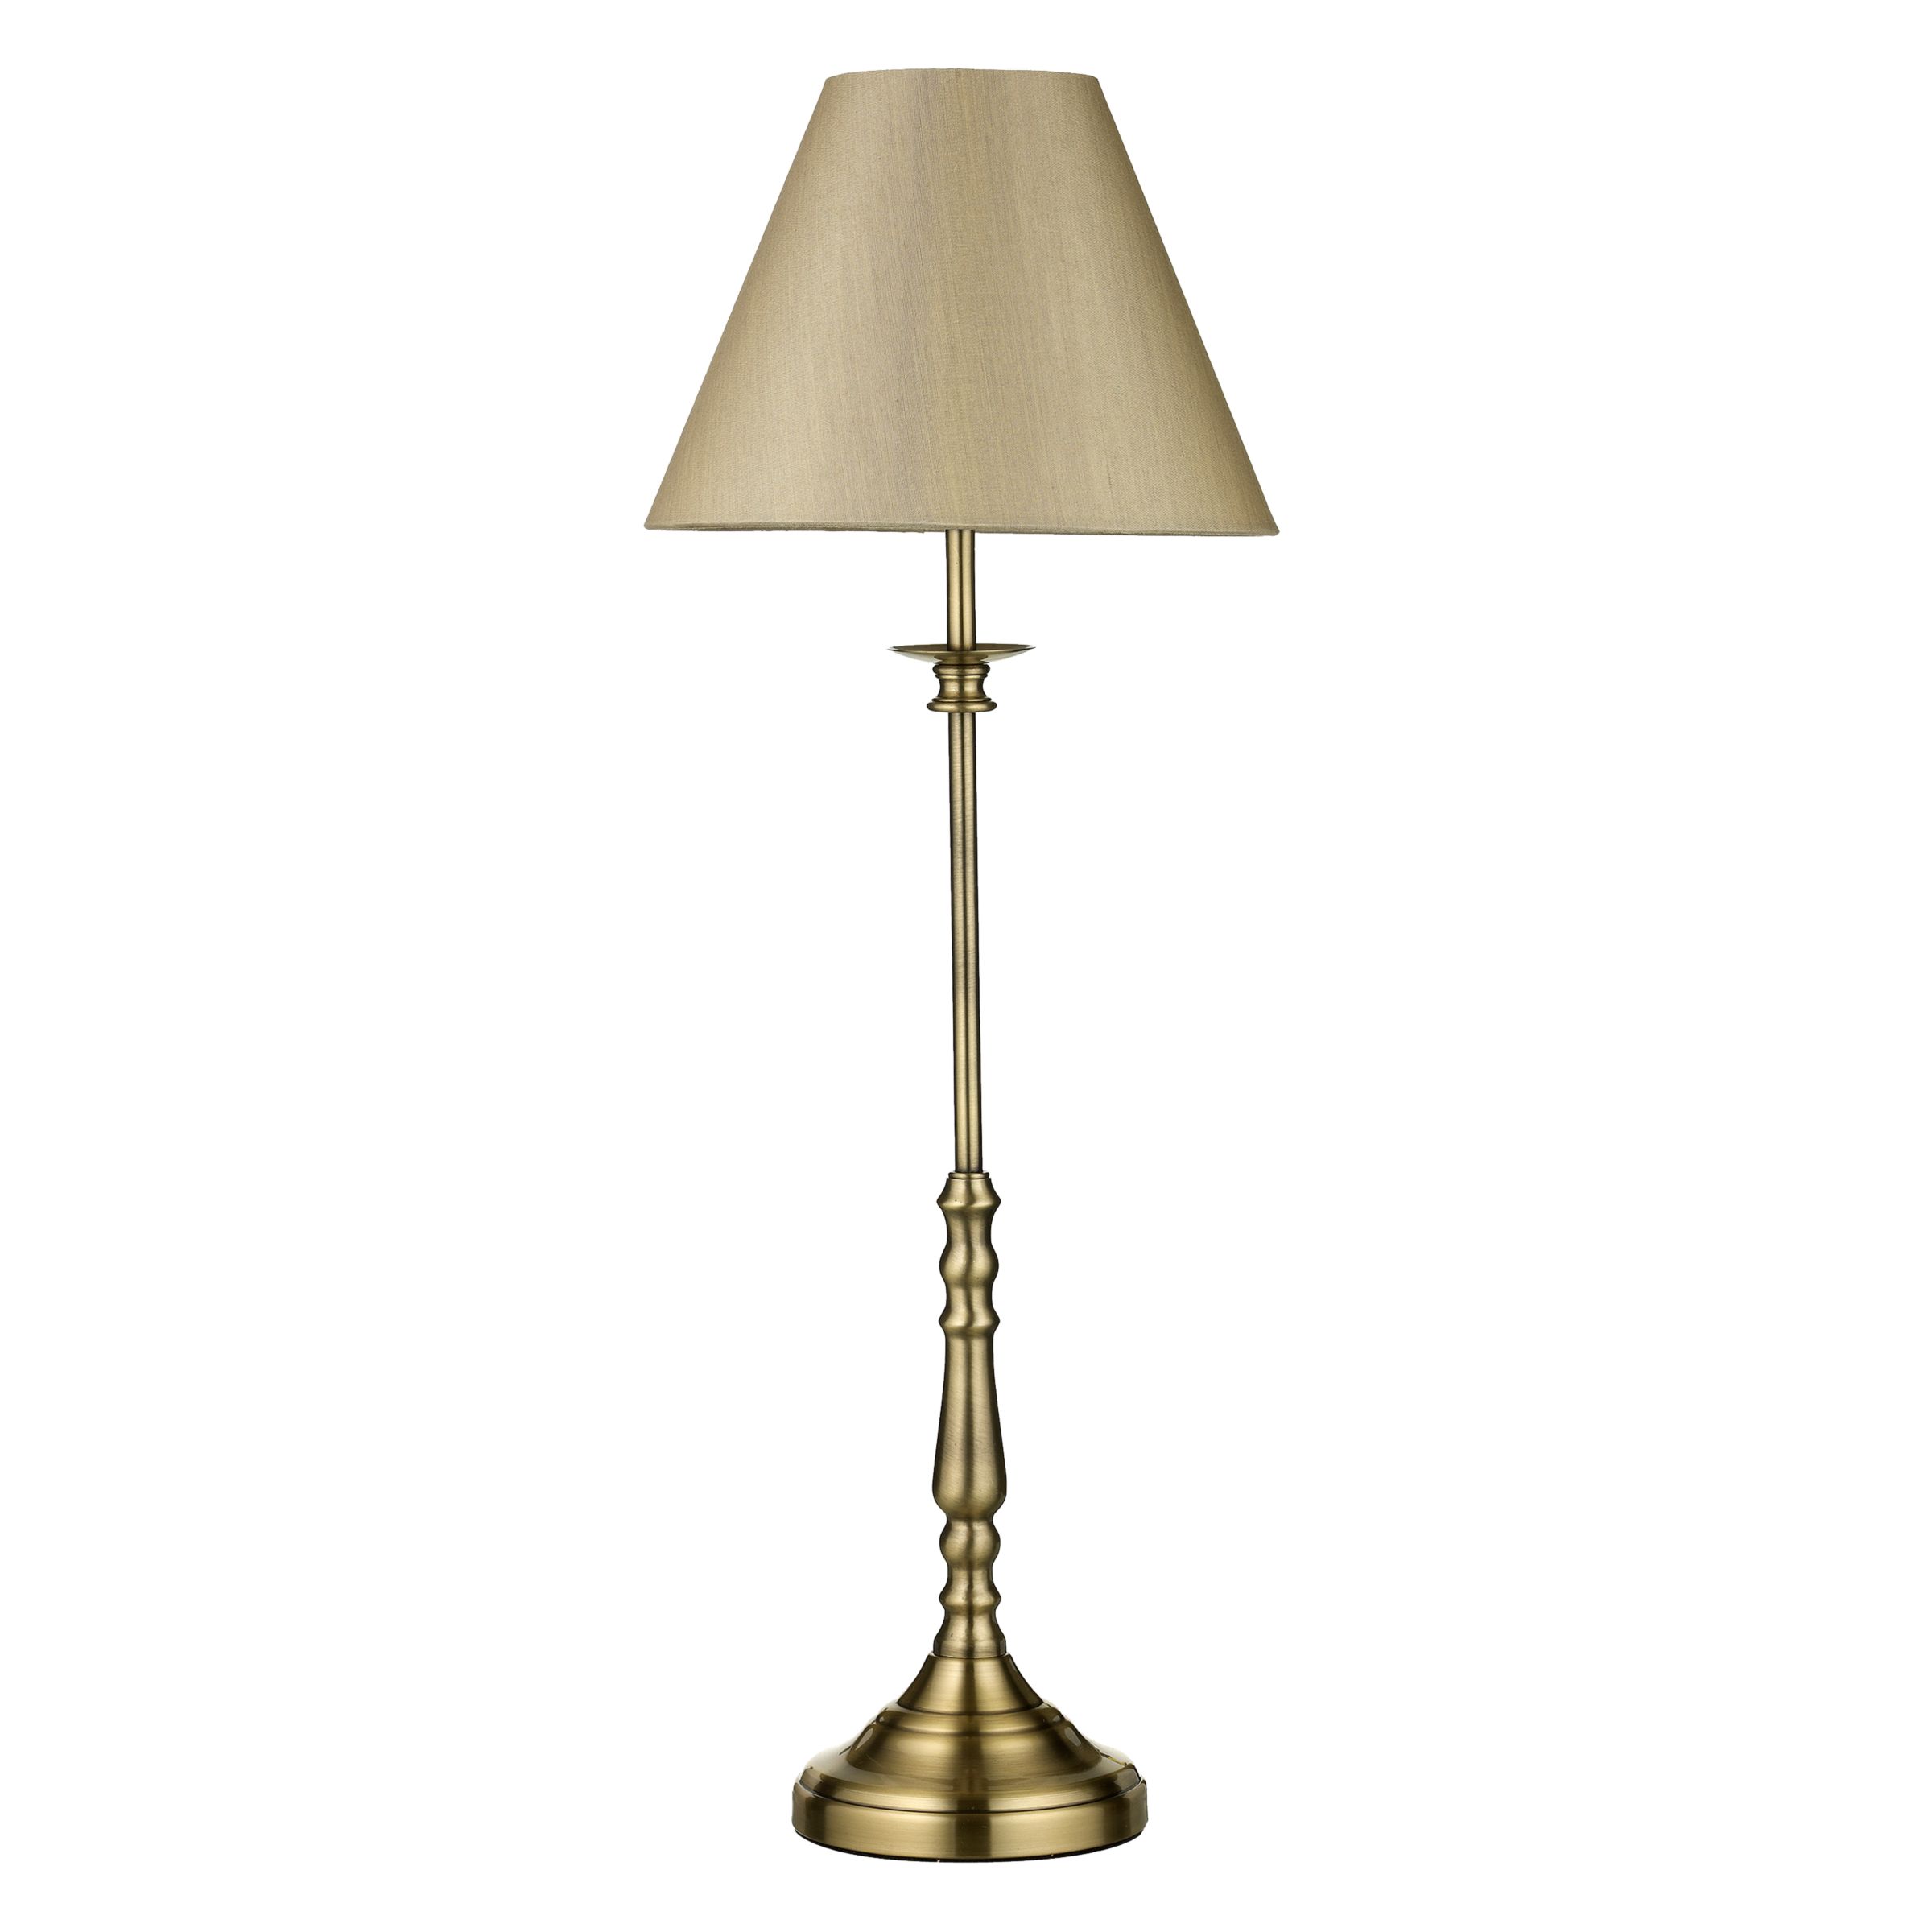 John Lewis Sloane Table Lamp, Antique Brass